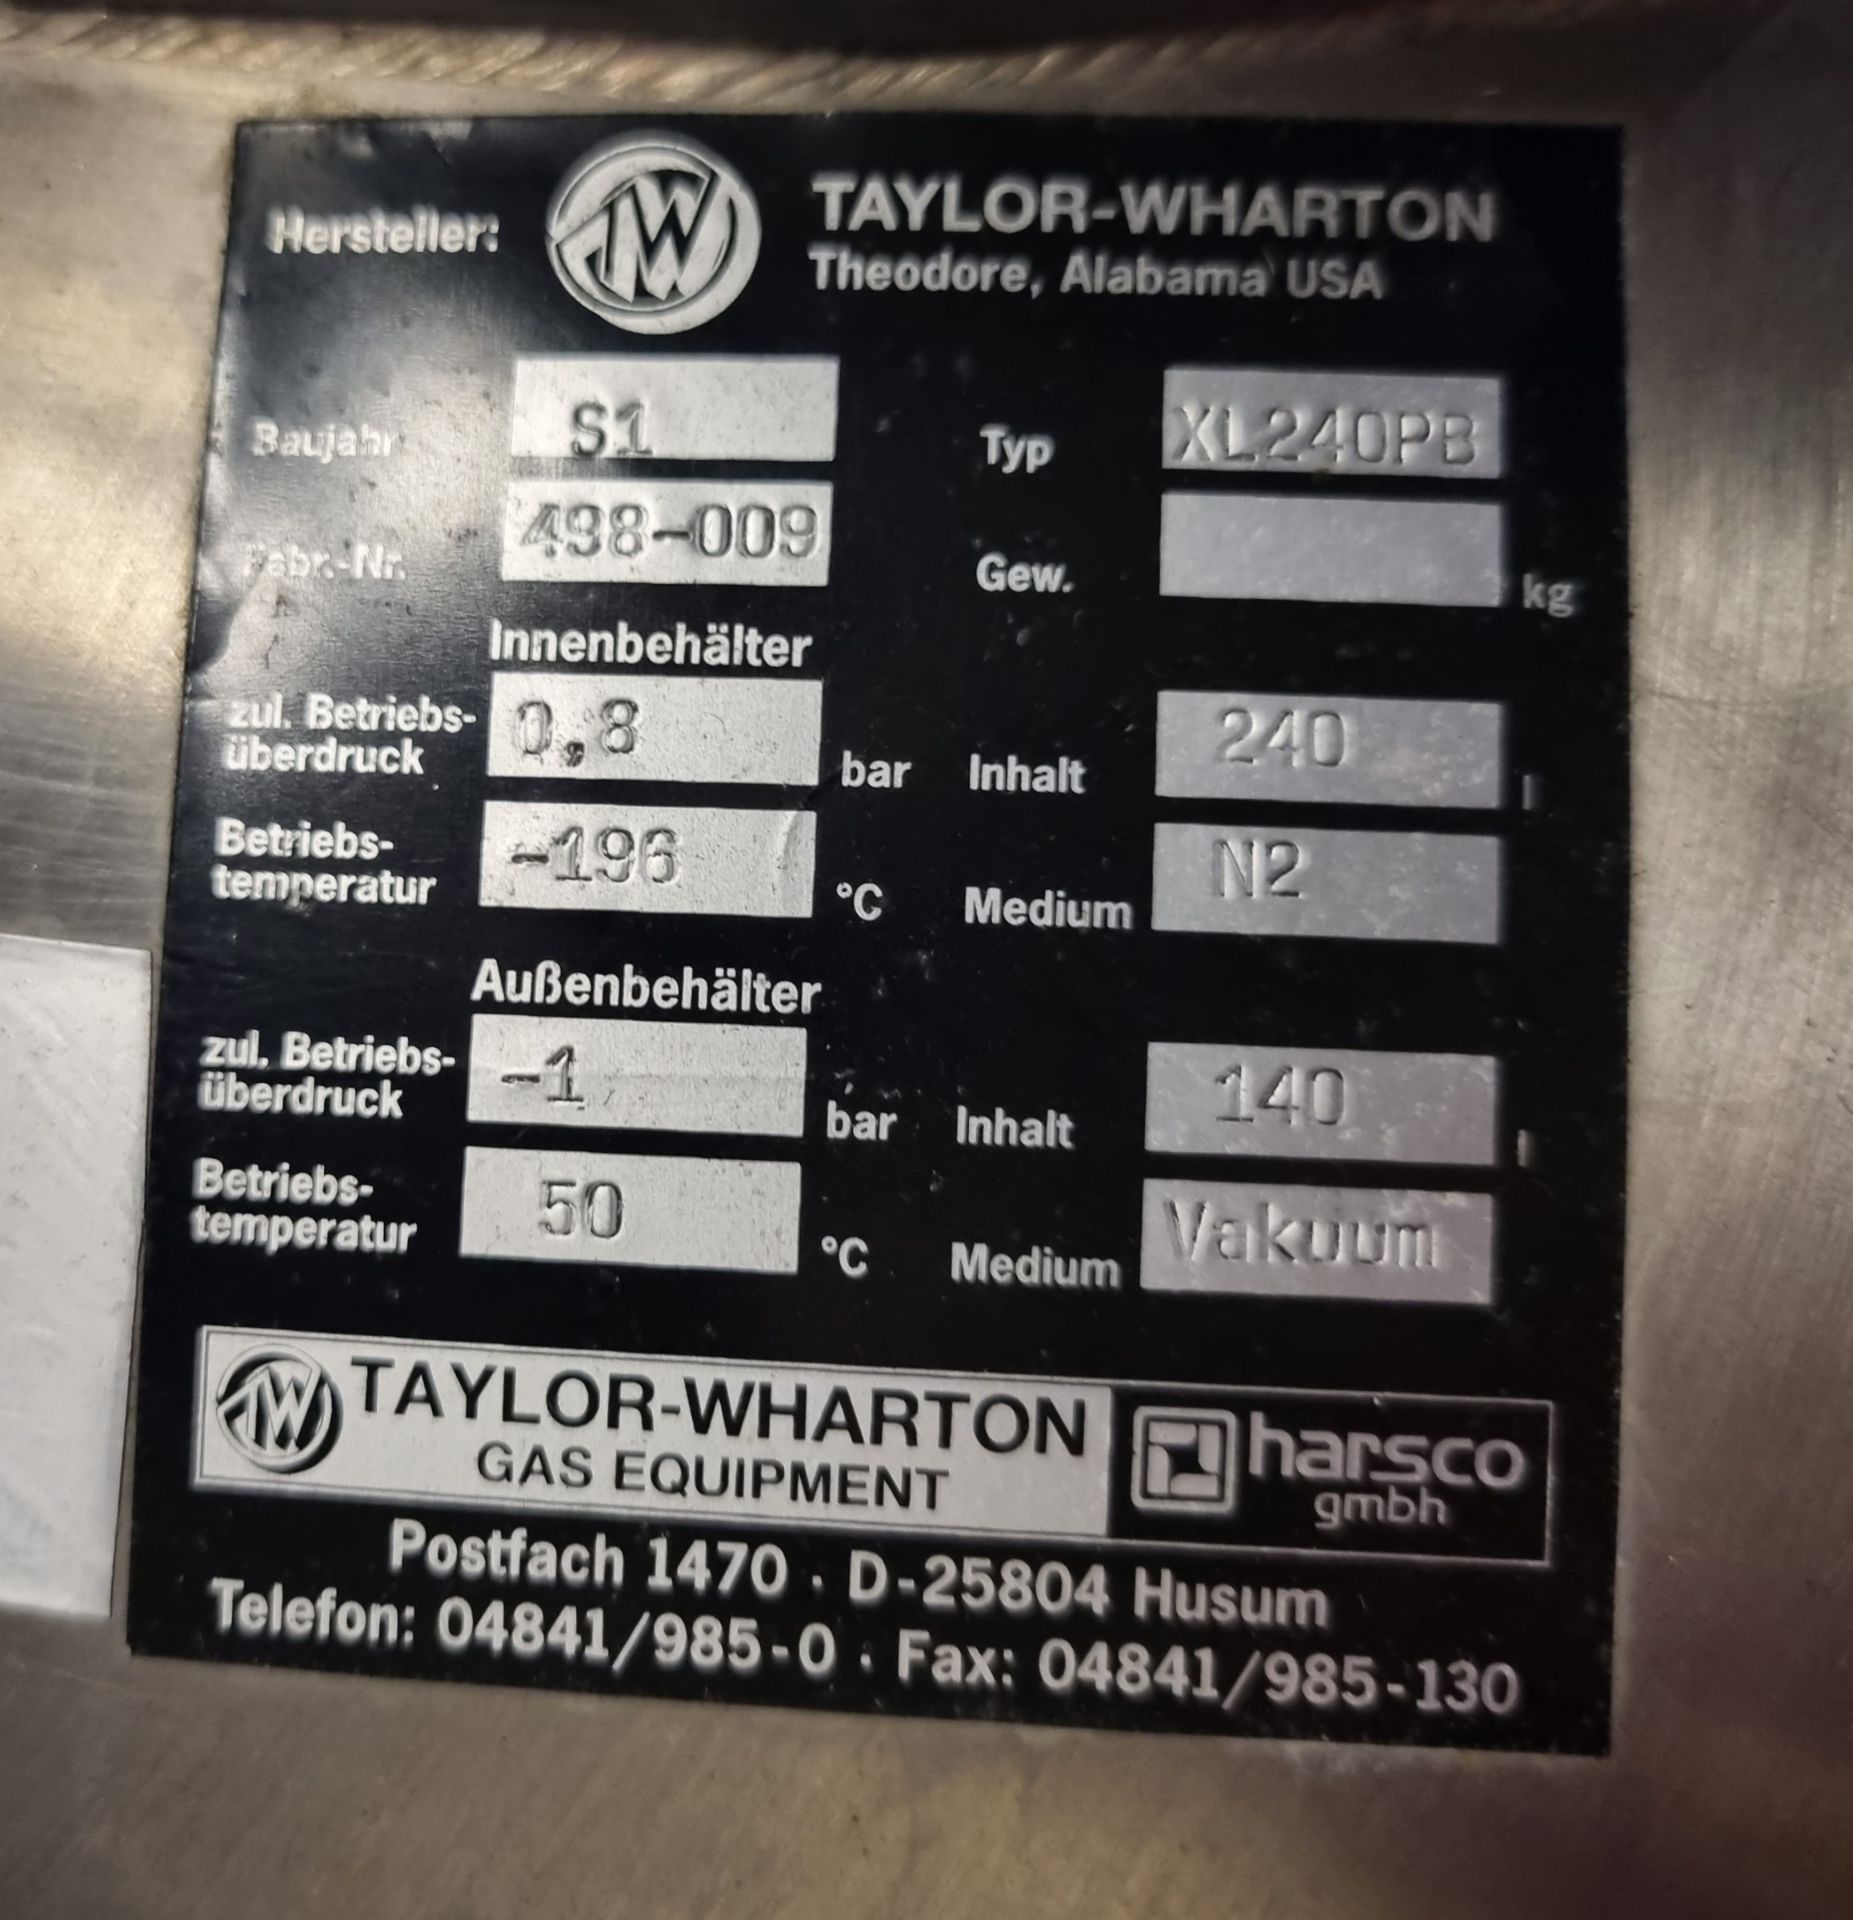 Taylor Wharton XL240PB LN2 laboratory cylinder - 240 ltr - 0.8 bar - Image 5 of 6